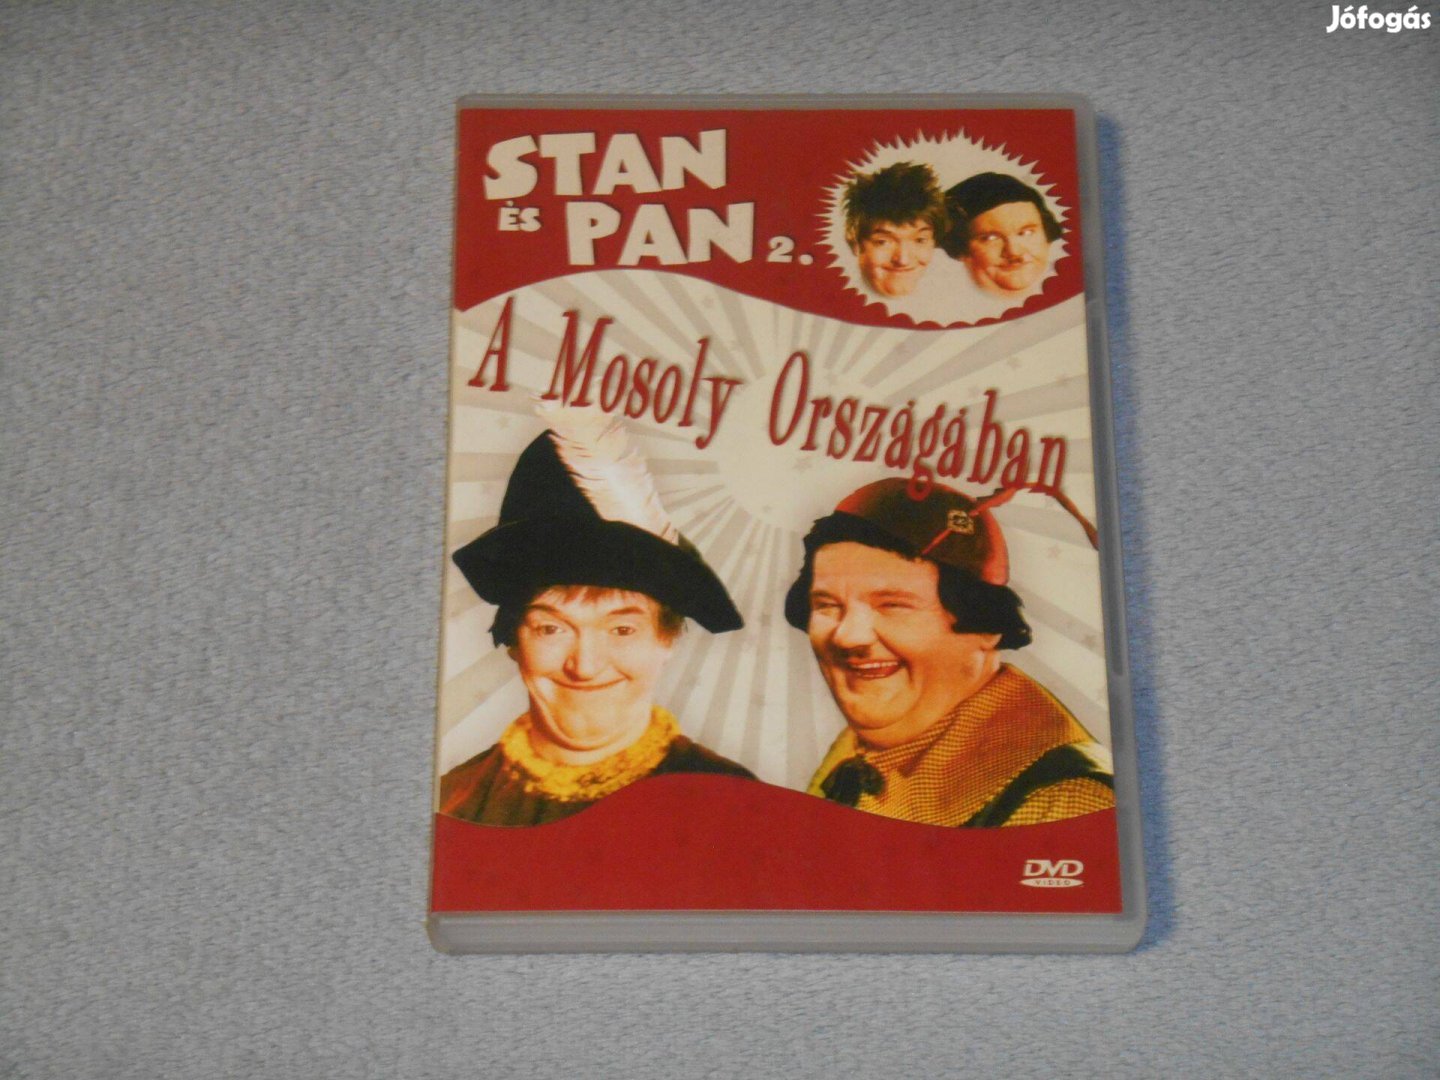 Stan & Pan 2. - A mosoly országában DVD film